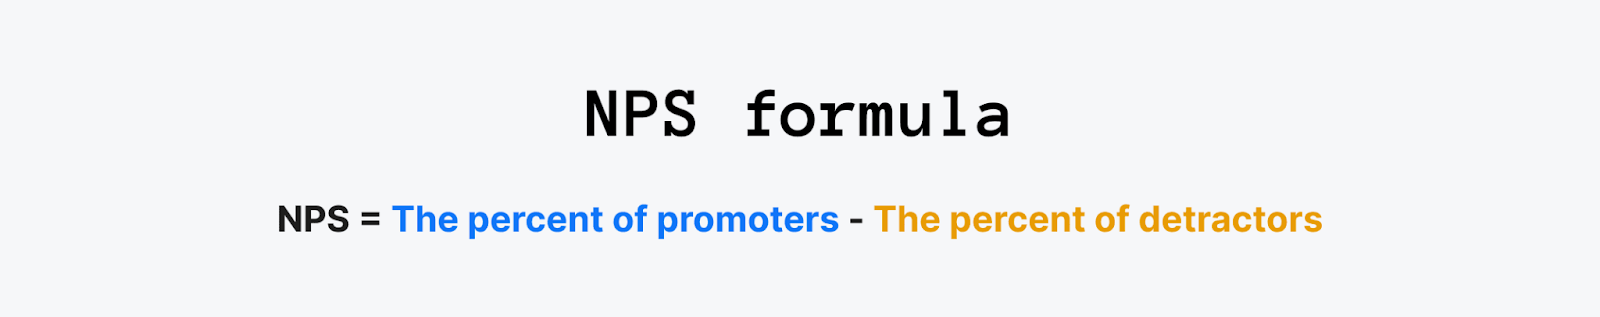 Net promoter score formula for businesses and startups